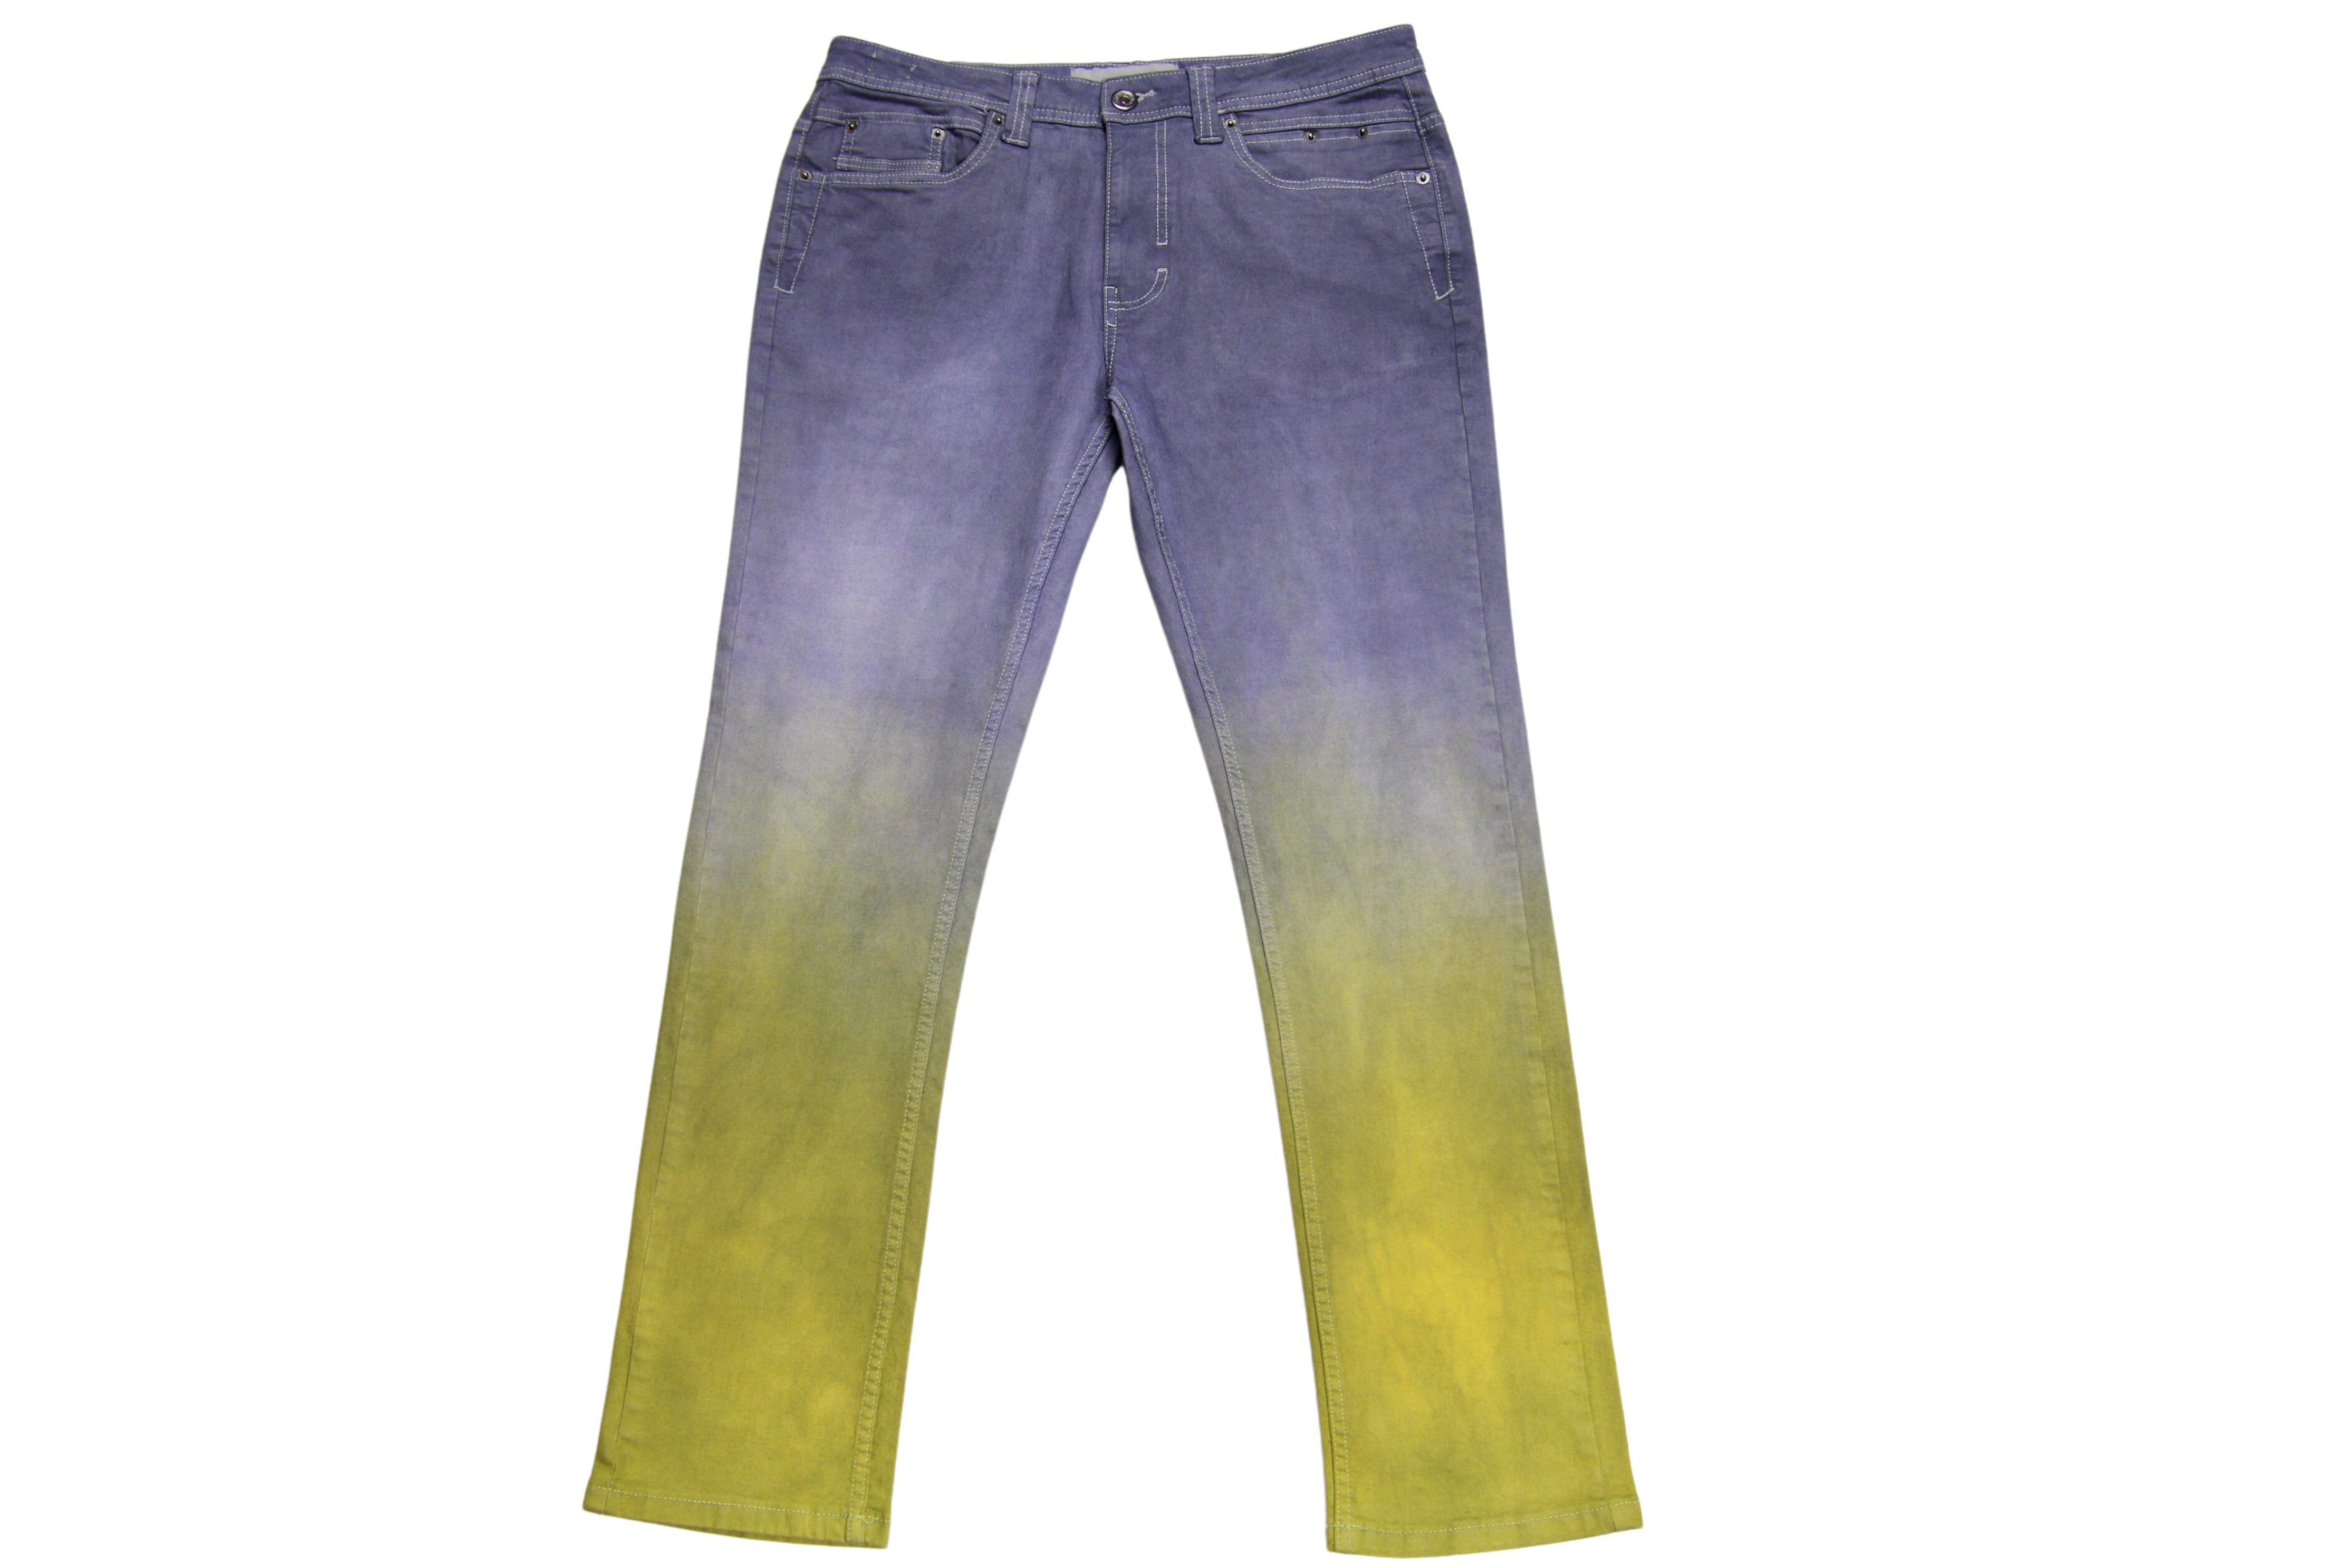 Custom Denim Jeans (1 Of 1 Pair) " Faded Purple & Gold"